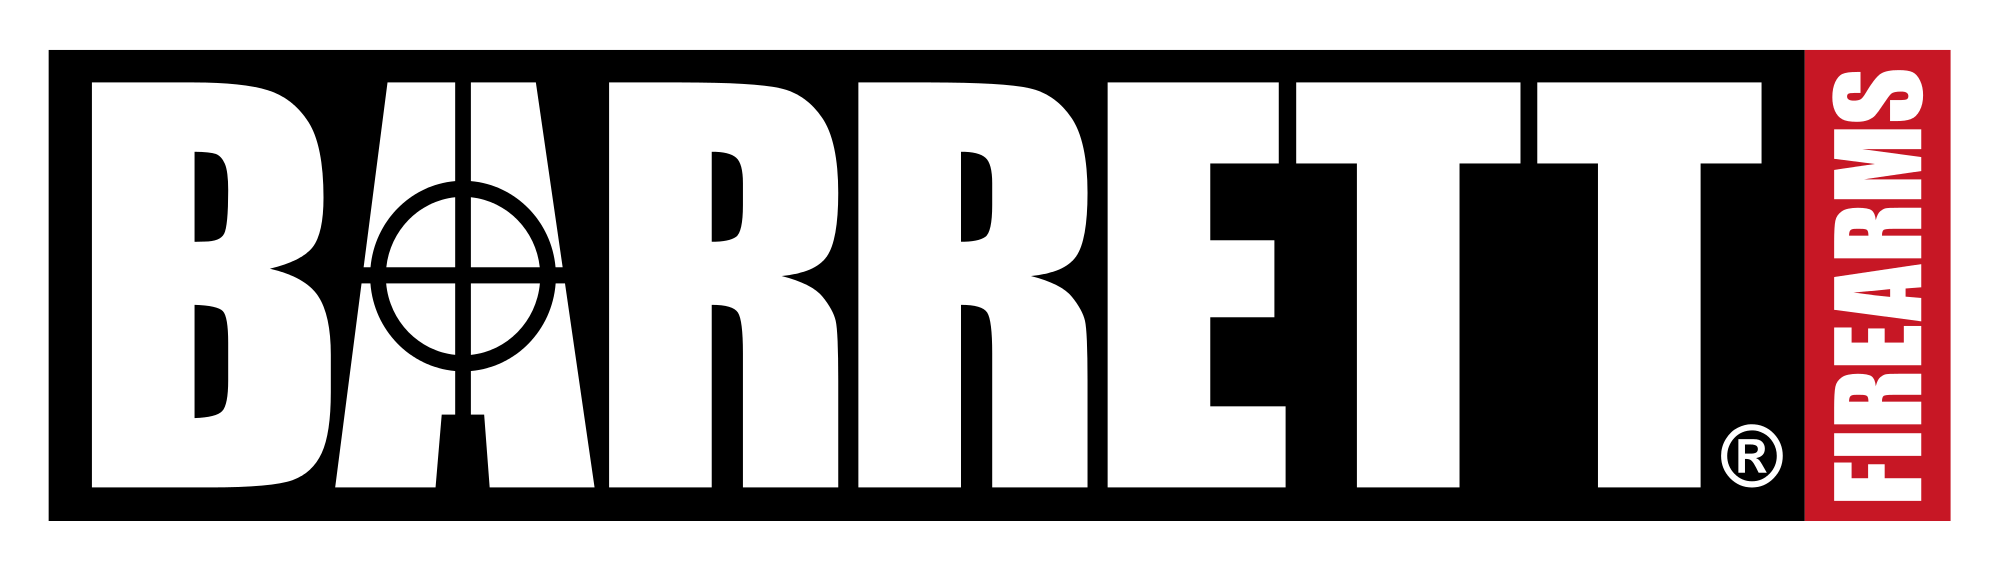 Barrett Logo - Logo Barrett Firearms Manufacturing.svg